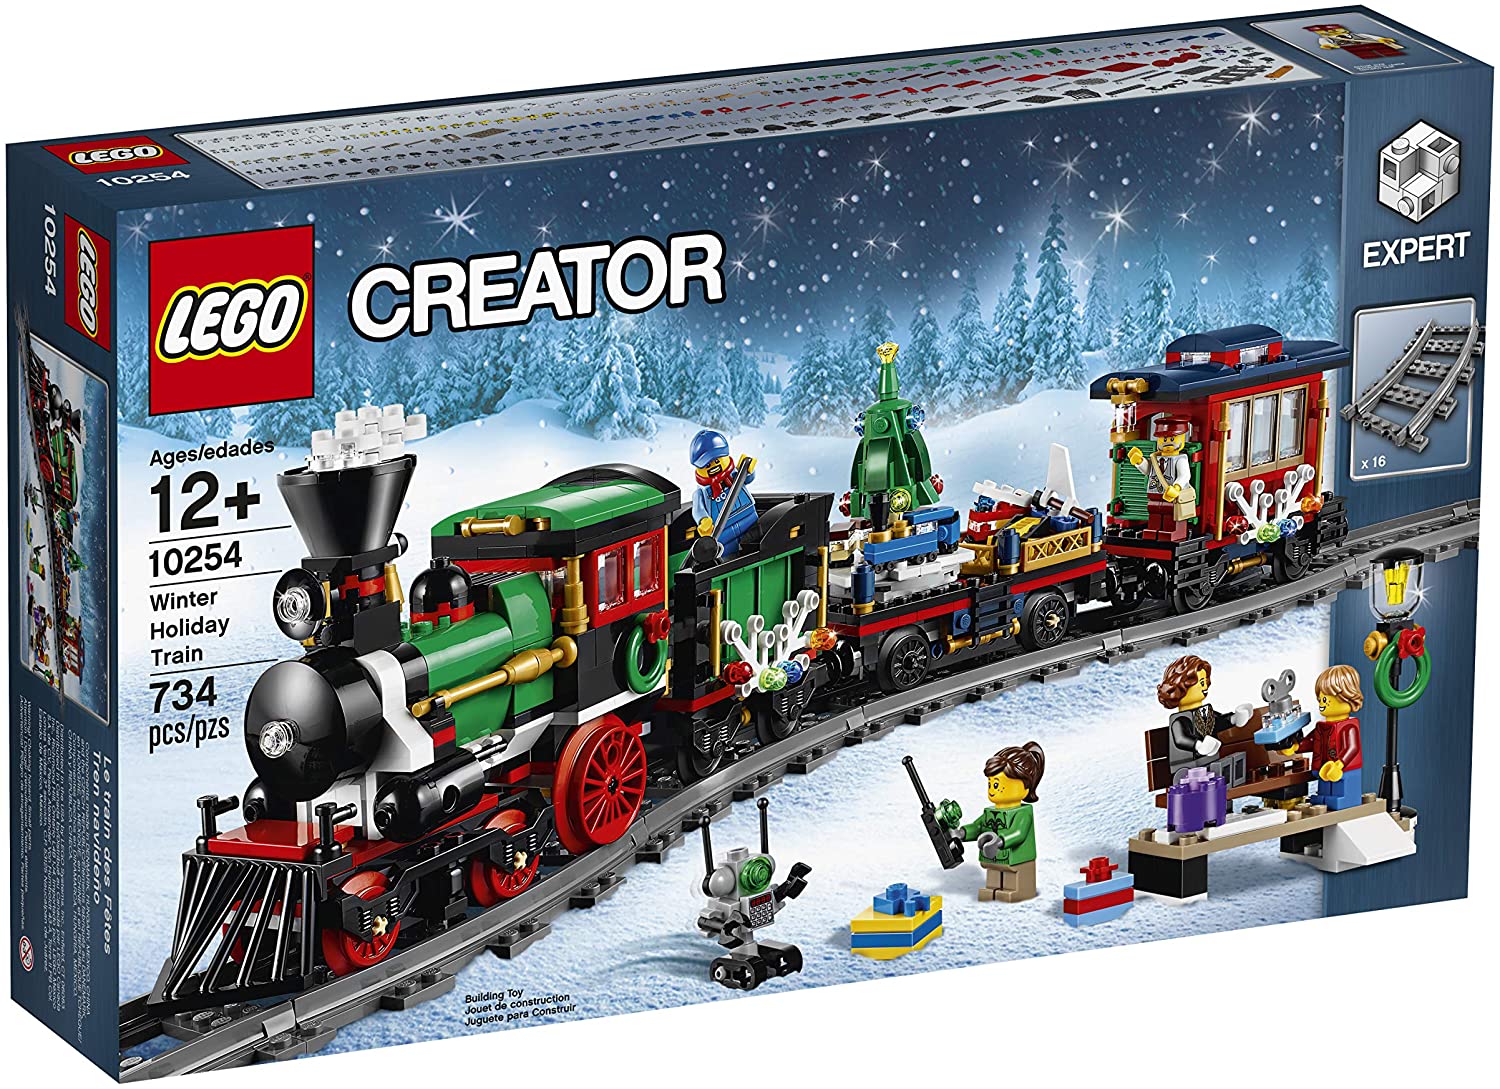 LEGO CREATOR EXPERT - 10254 - WINTER HOLIDAY TRAIN